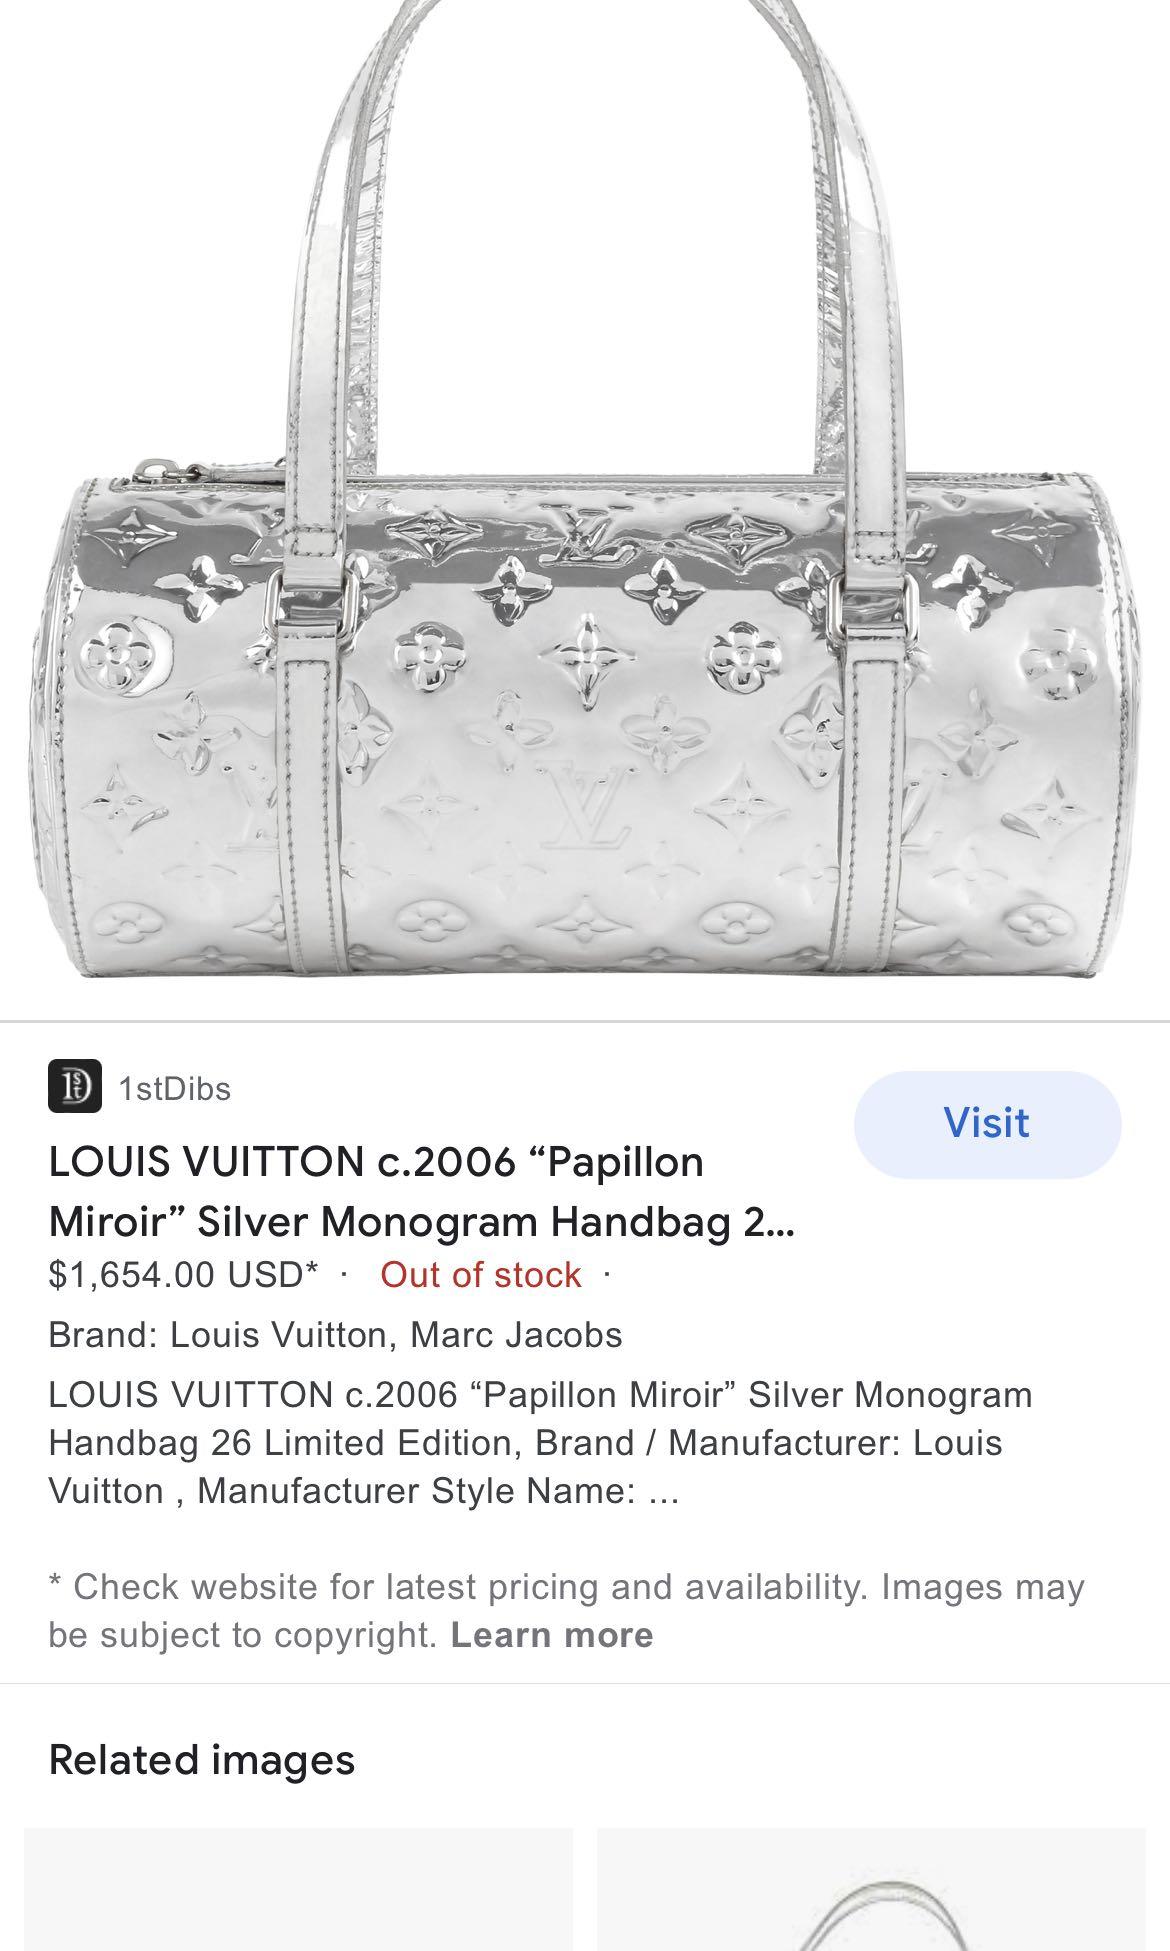 Black White Louis Vuitton Bag - 29 For Sale on 1stDibs  black and white  louis vuitton, lv purse black and white, black and white louis vuitton  handbag